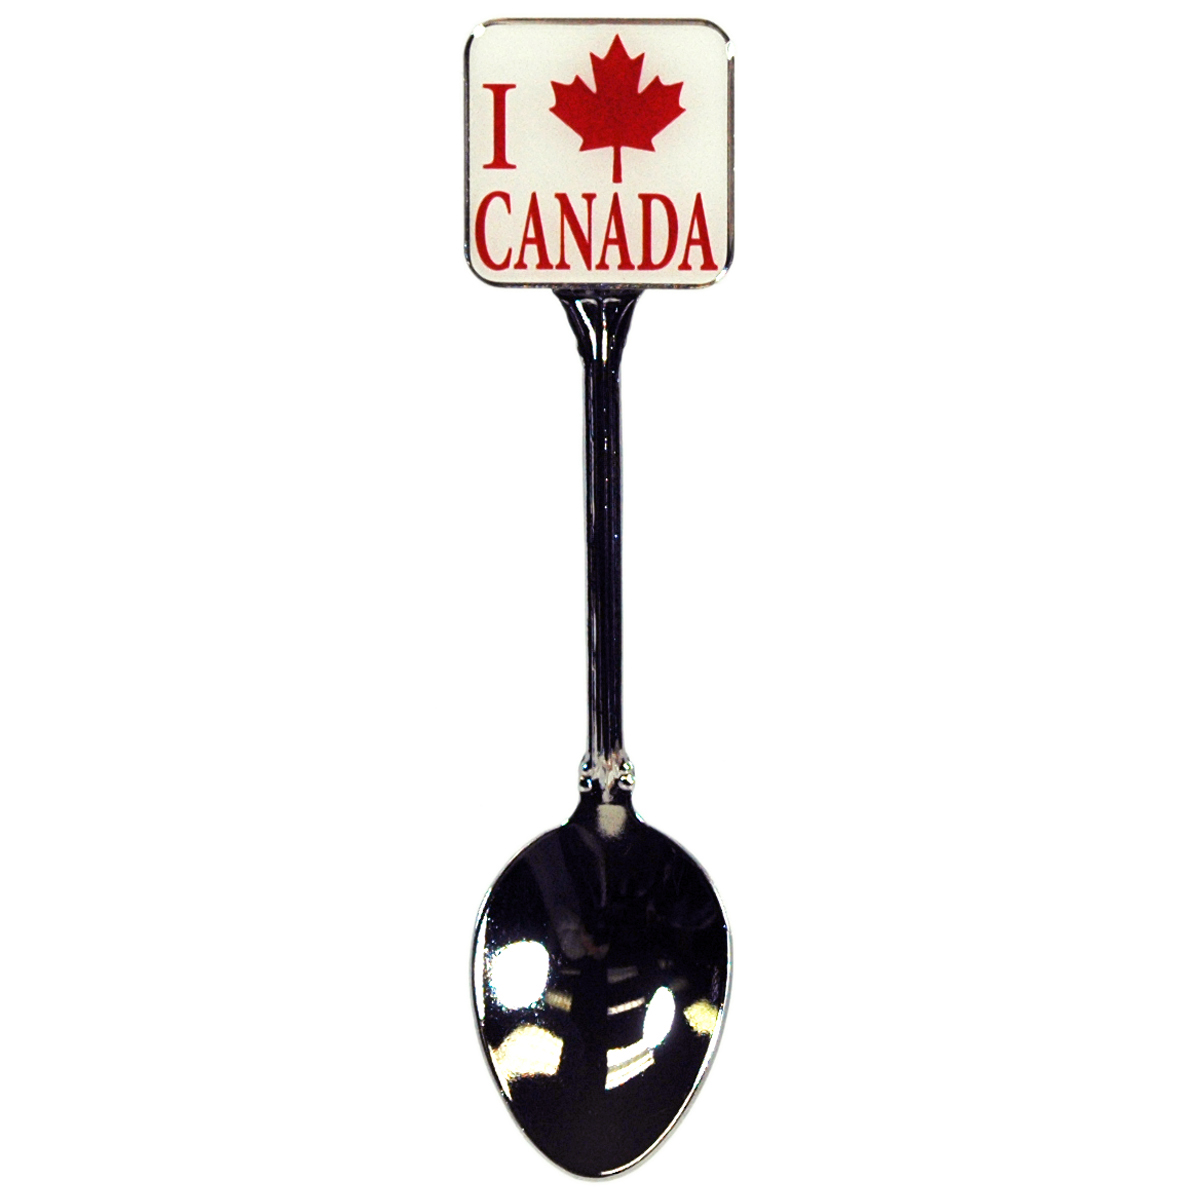 Canada Souvenir Spoon 89986JE I Heart Canada Maple Leaf Collector Spoon Memorabilia Demitasse Tea Collectible